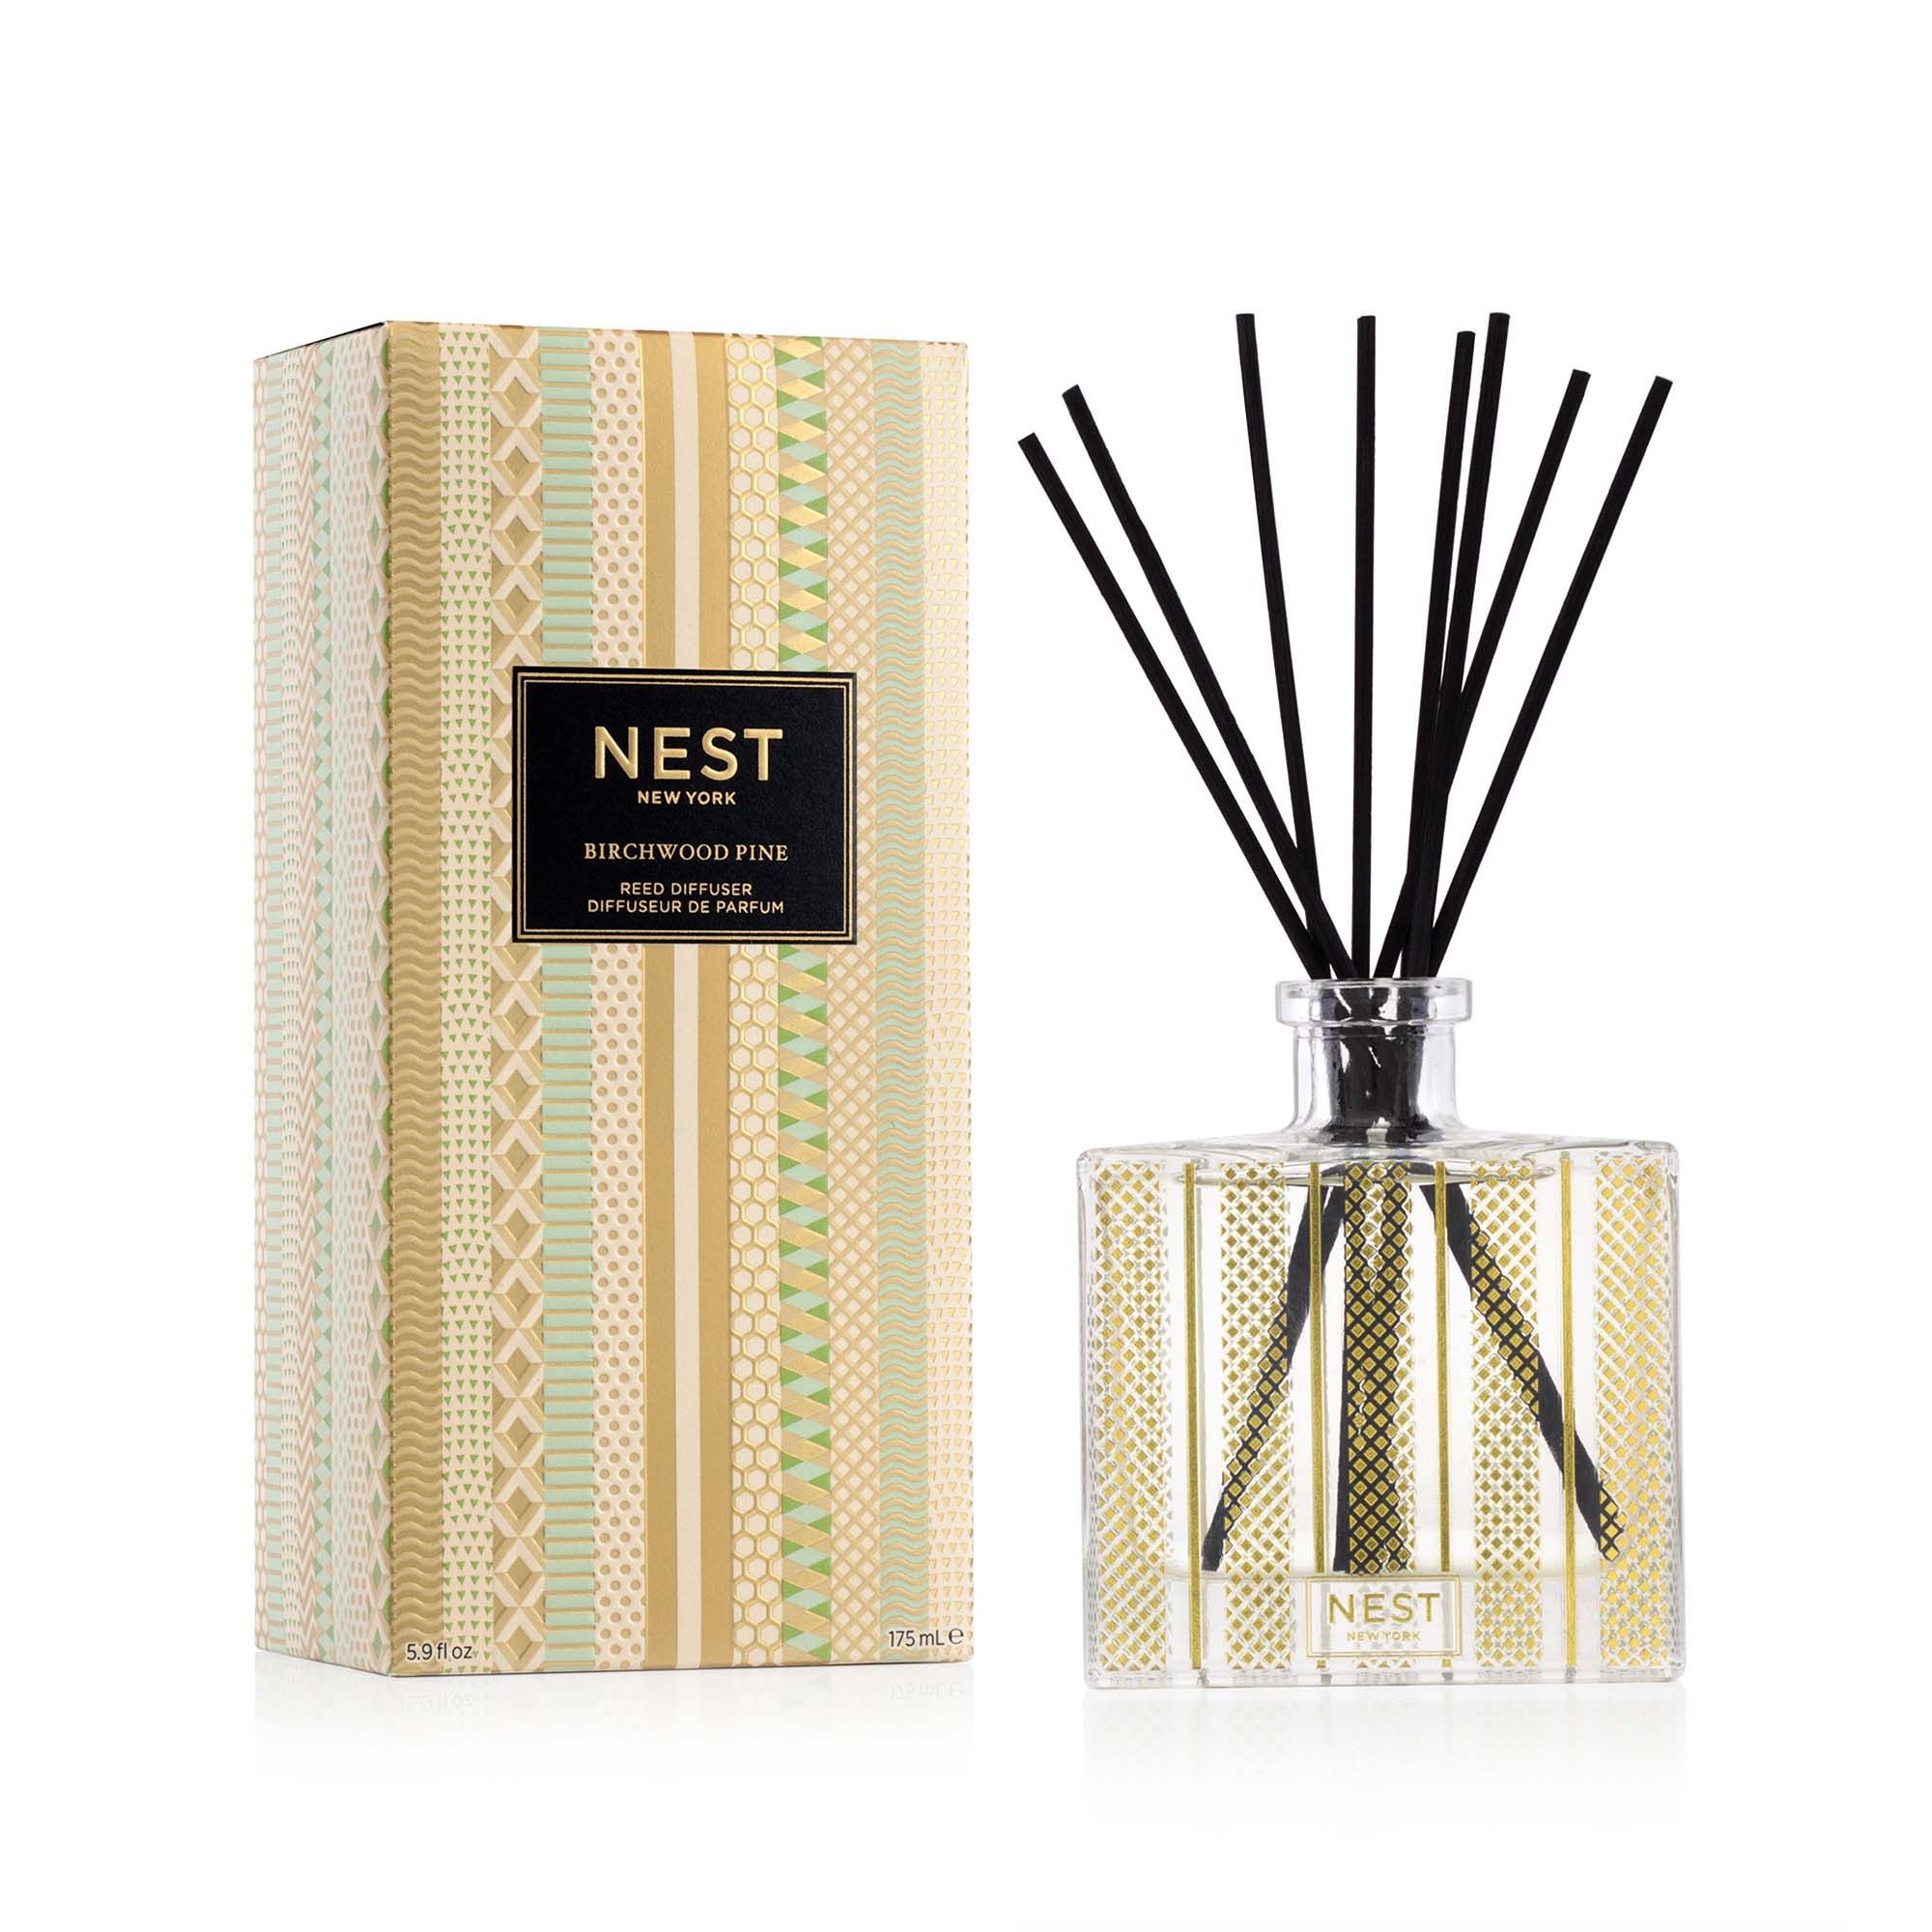 Birchwood Pine Reed Diffuser | NEST Fragrances